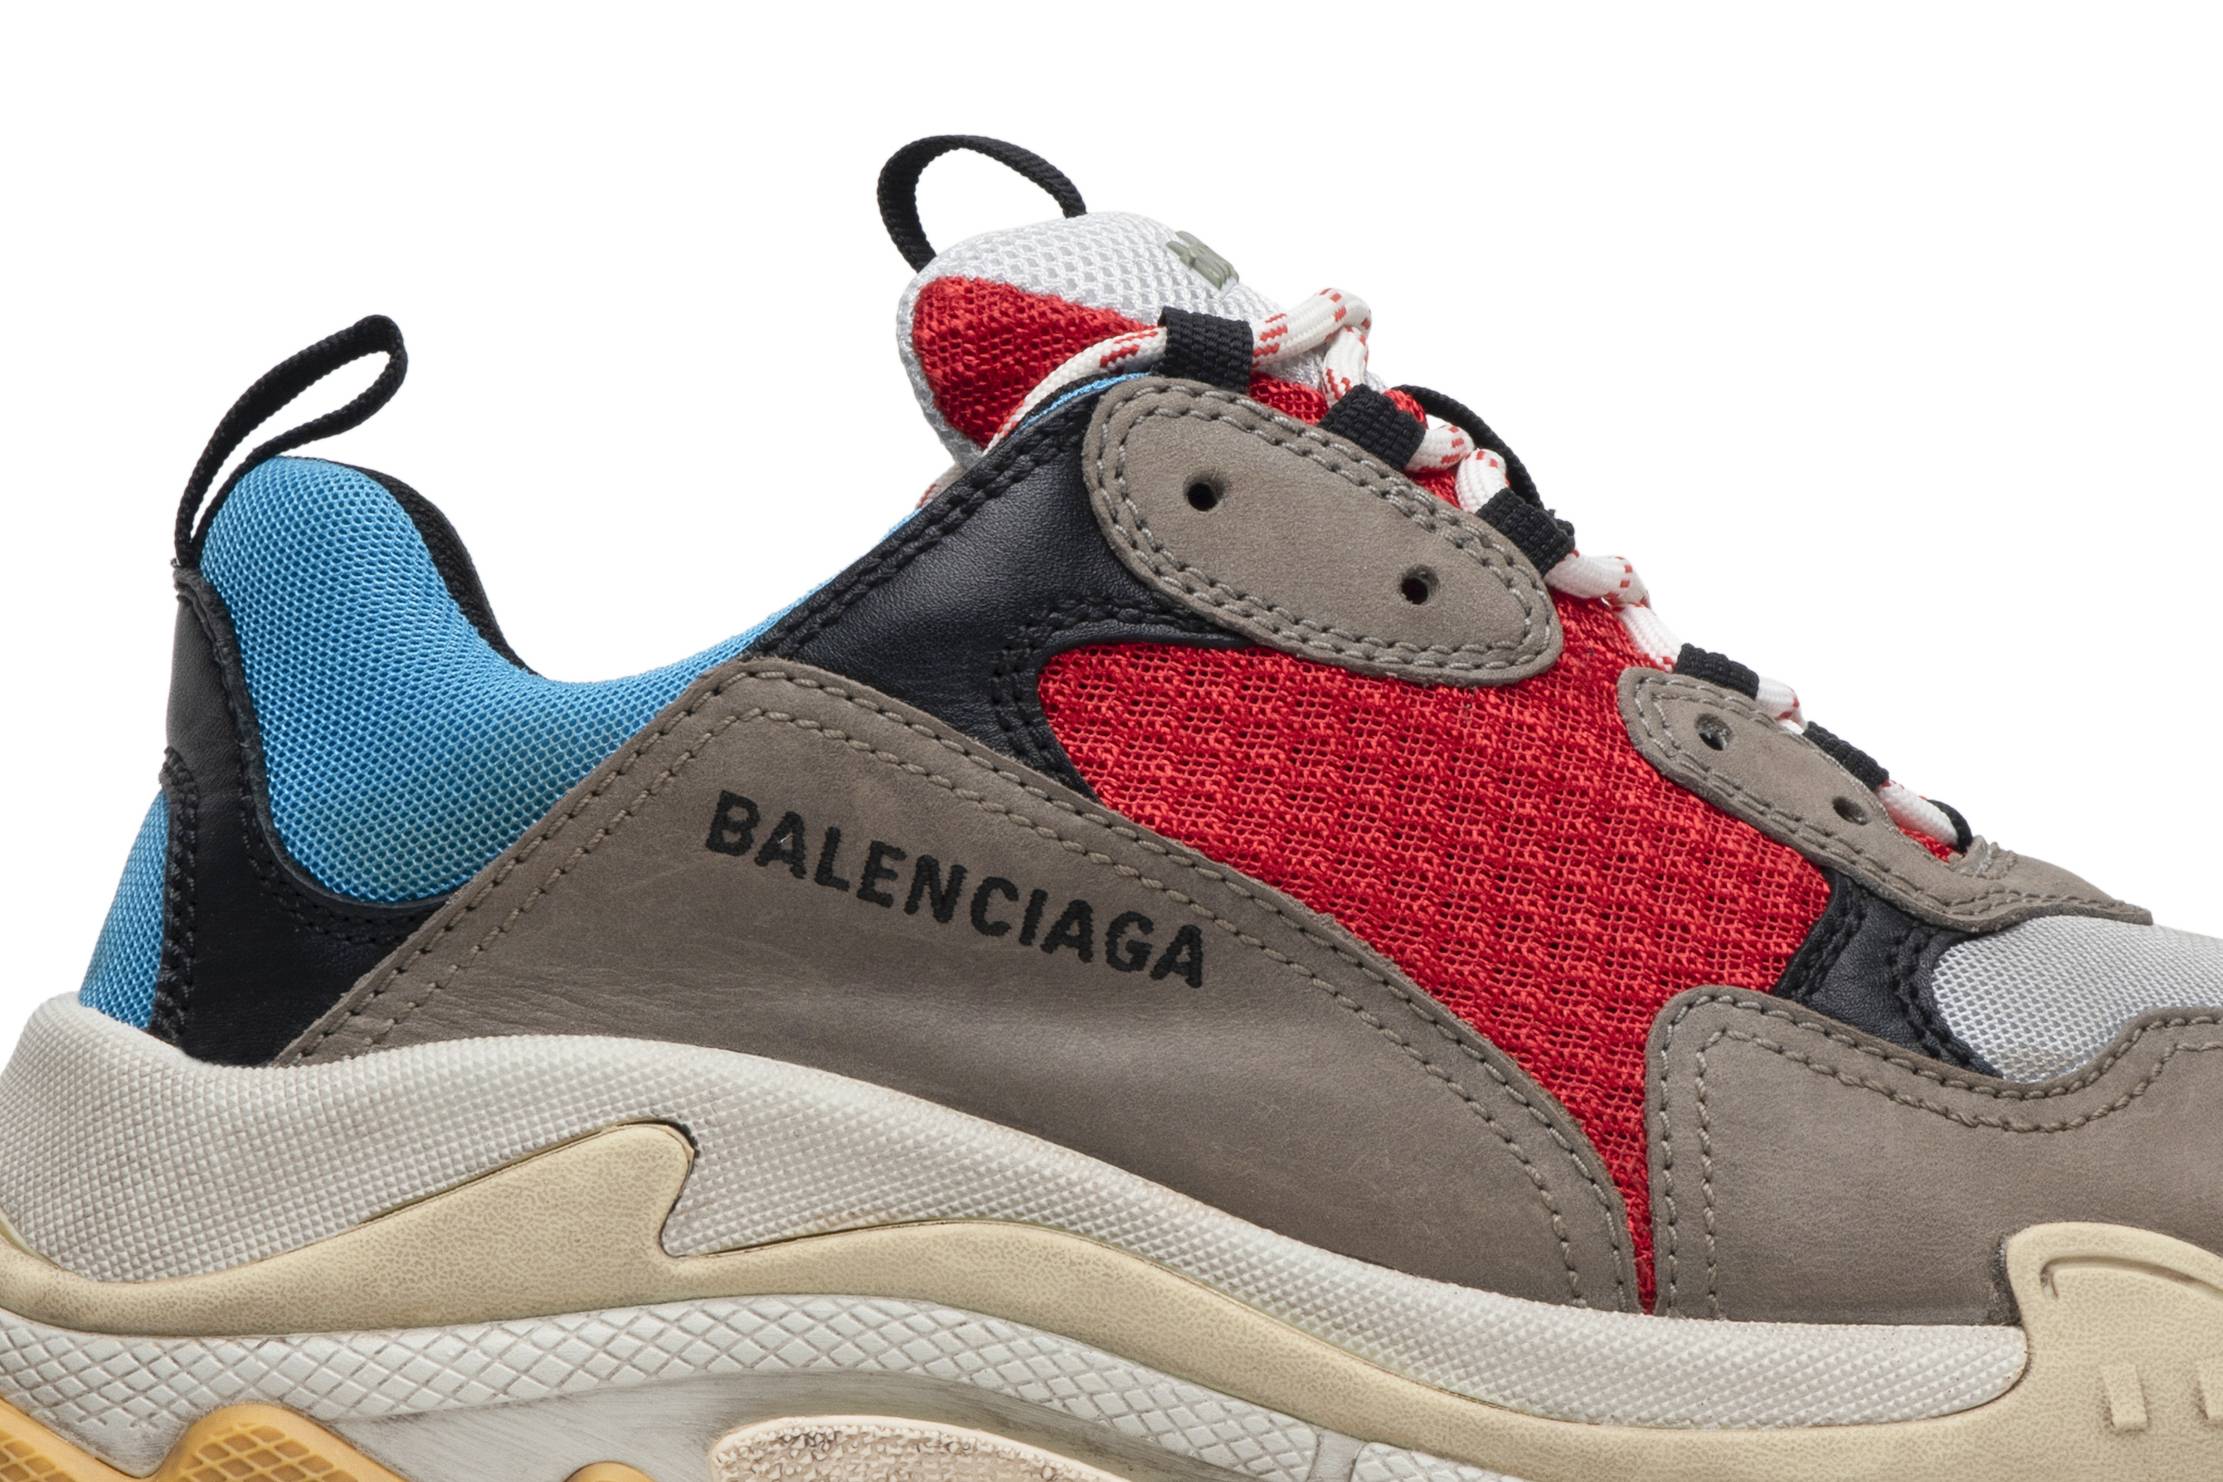 Balenciaga 3XL Trainers in White Red Blue  Designer Sneakers  RADPRESENT